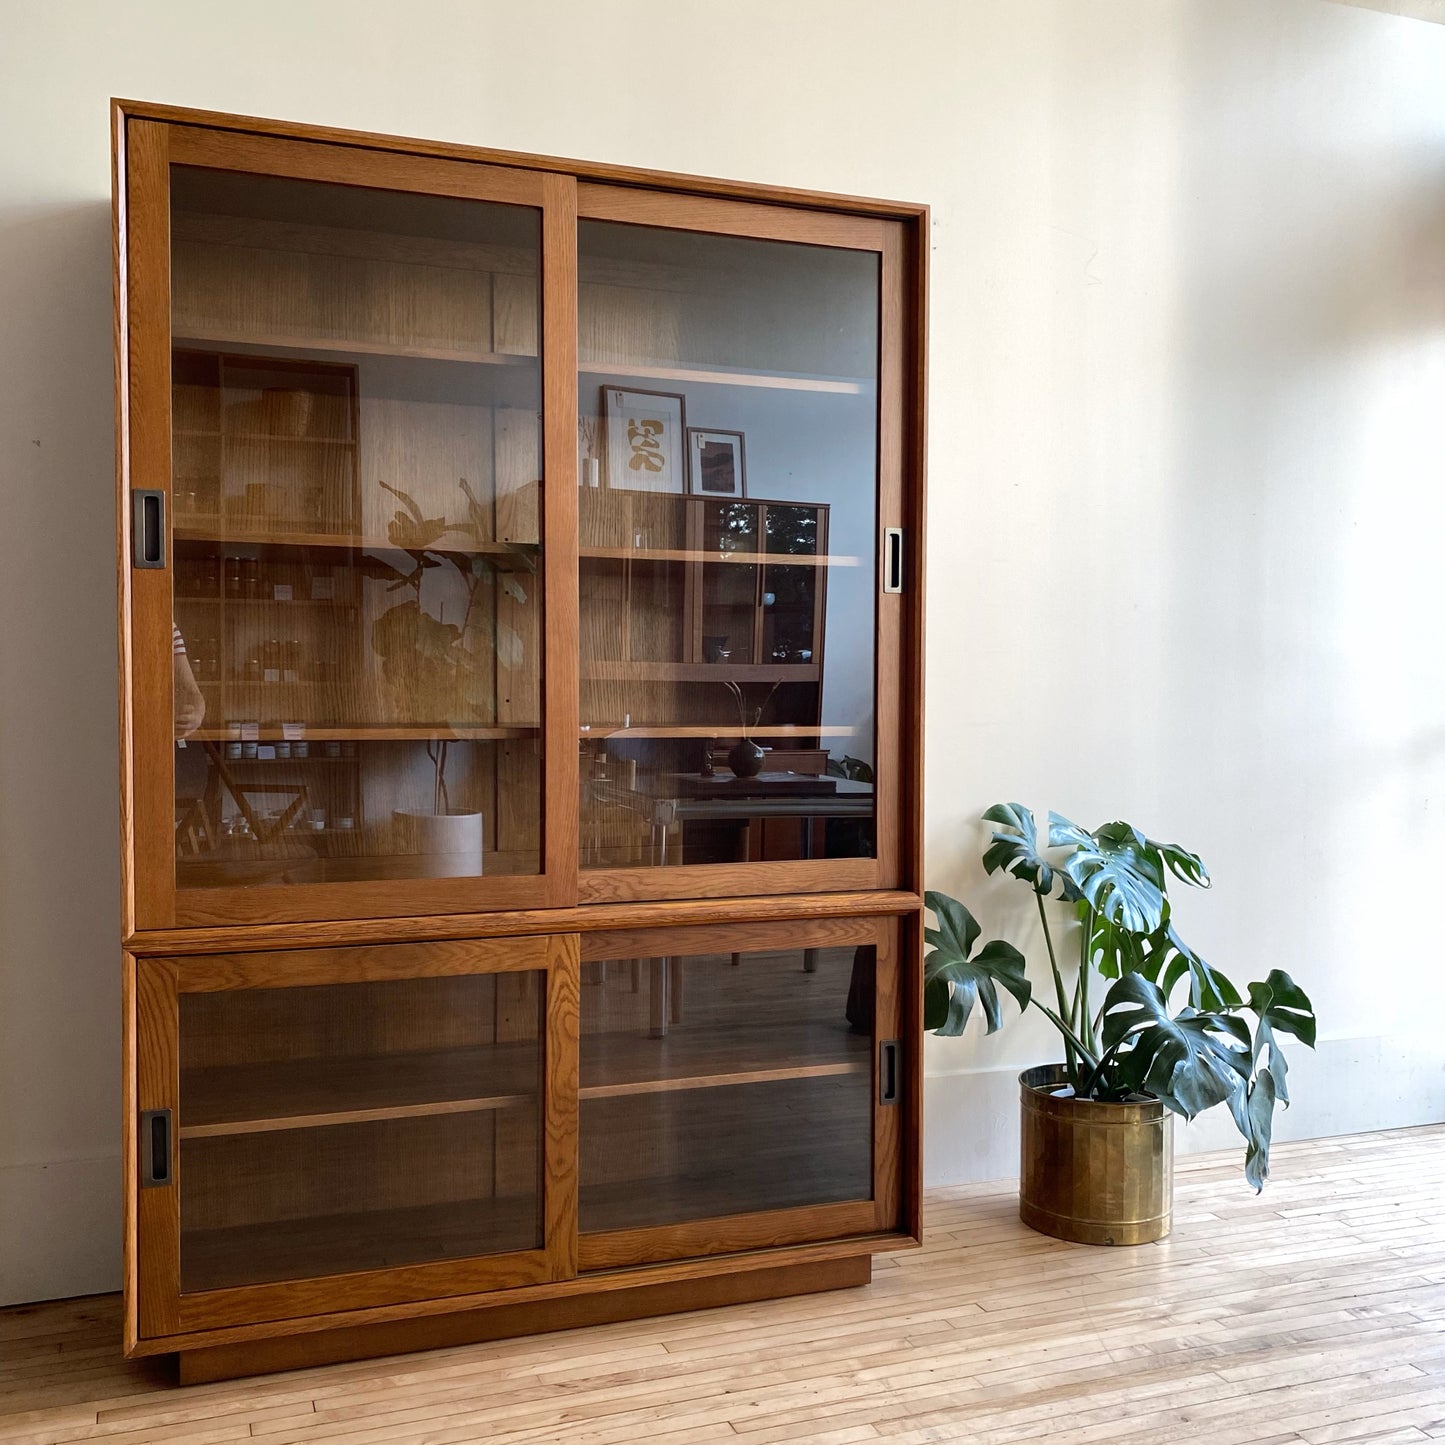 XL Contemporary Oak Display Cabinet / Hutch